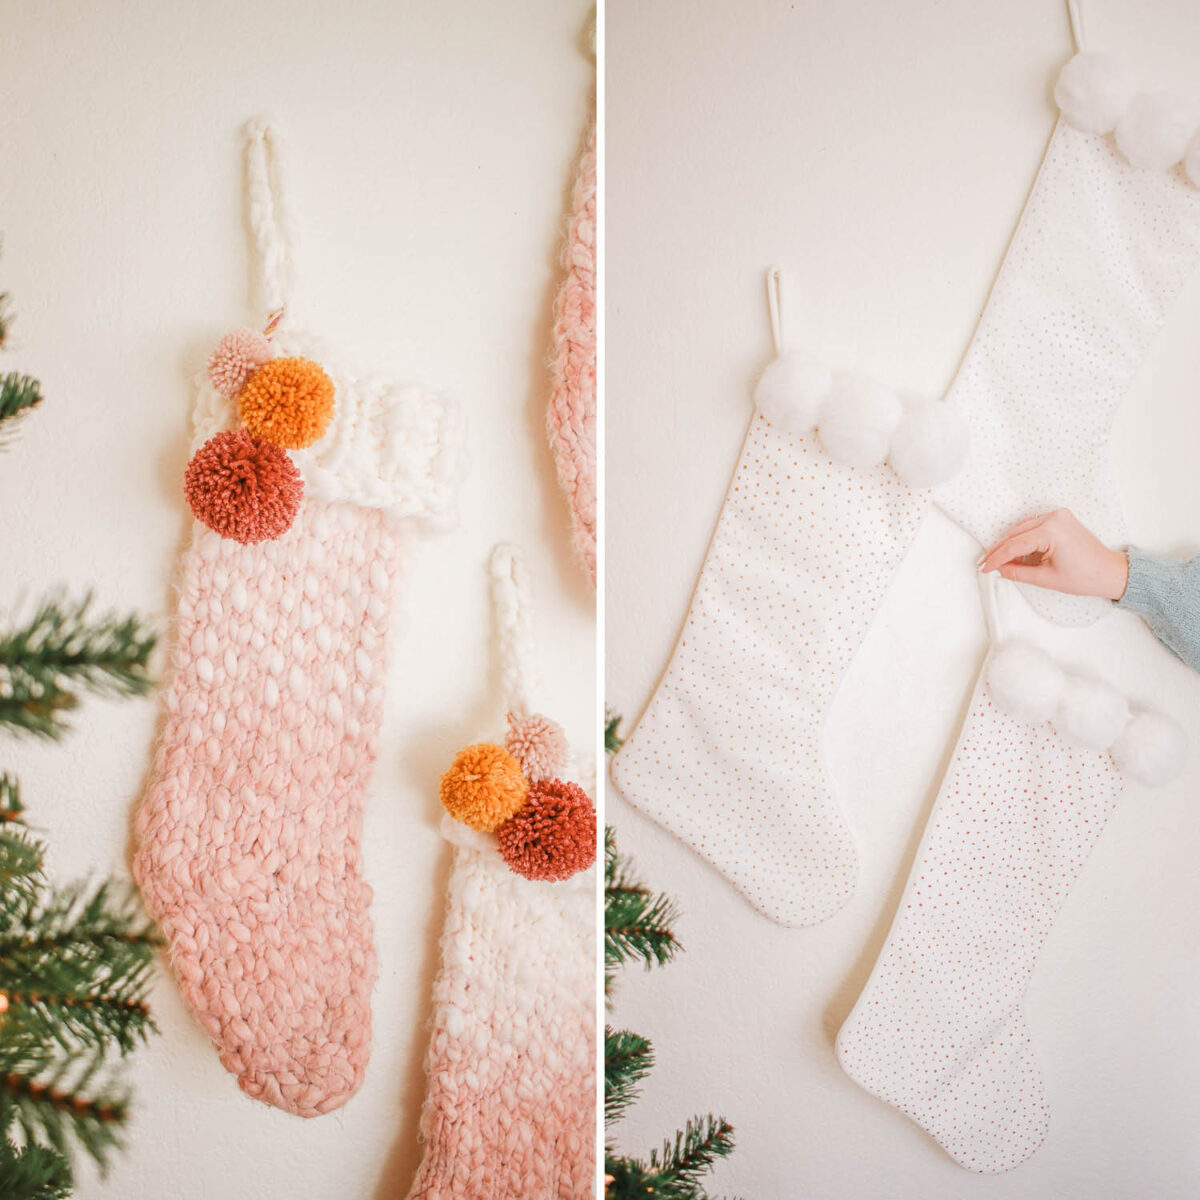 DIY Christmas Stockings – Two Styles!